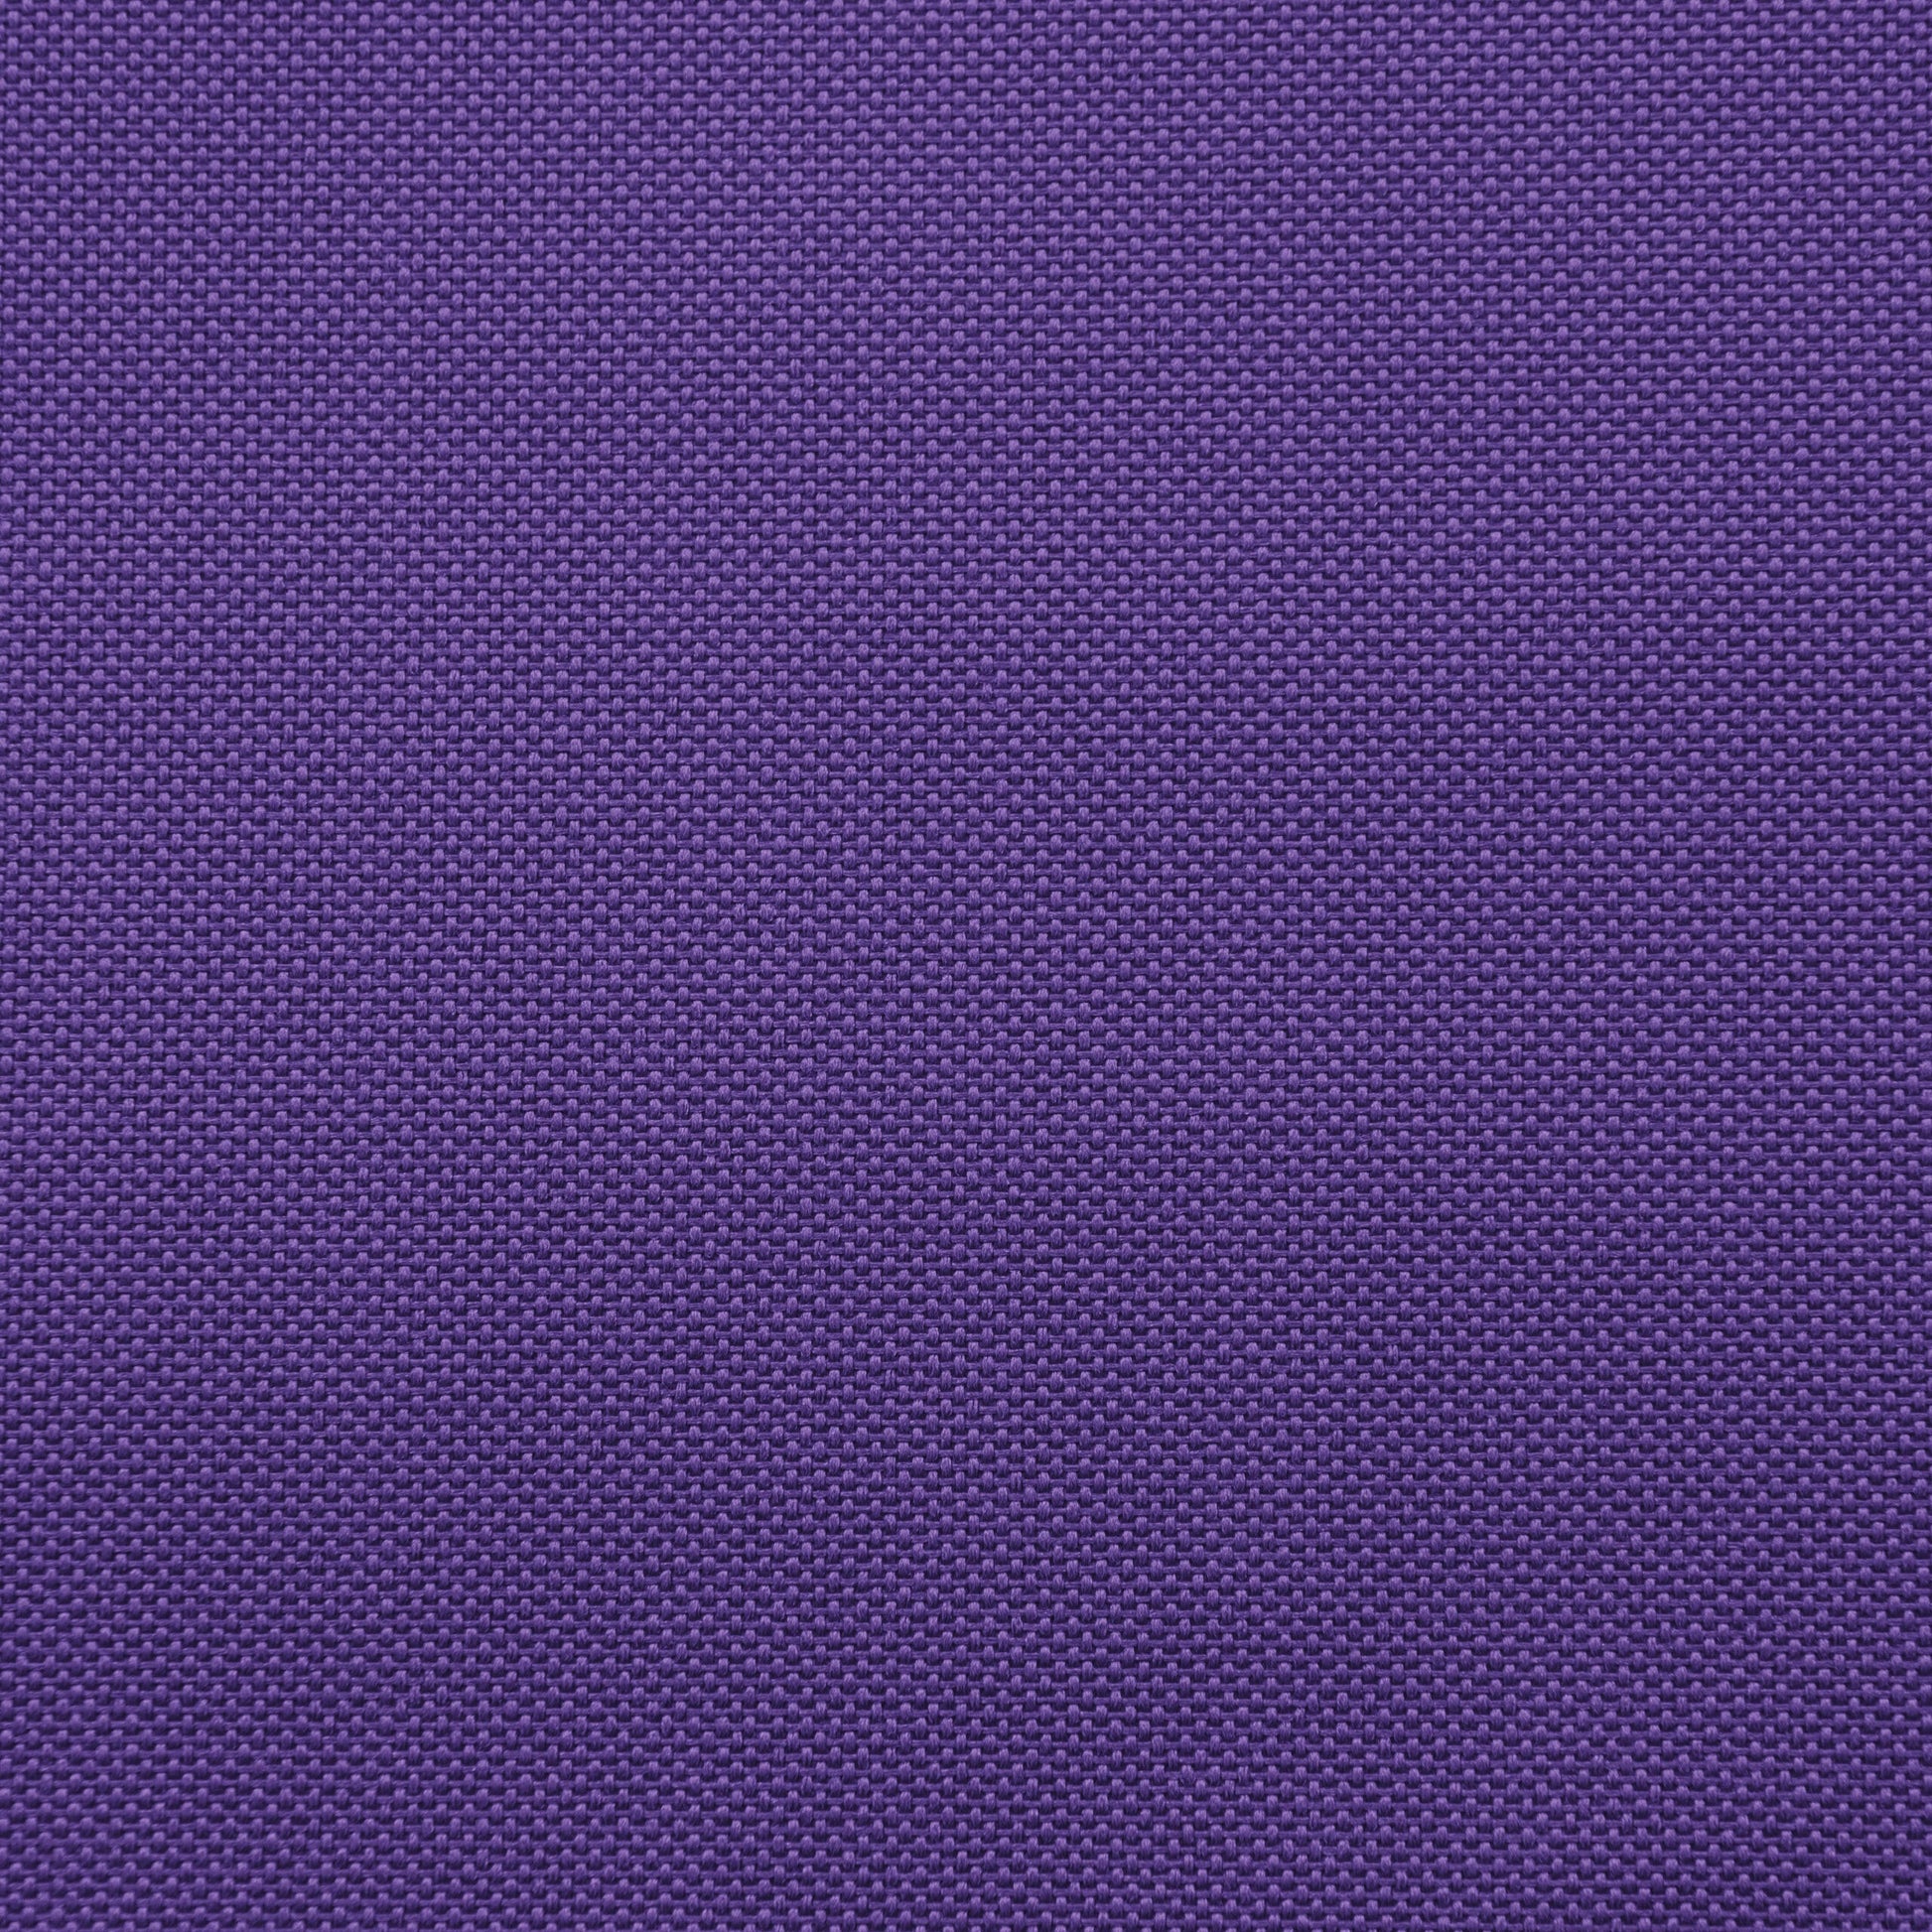 OX Purple